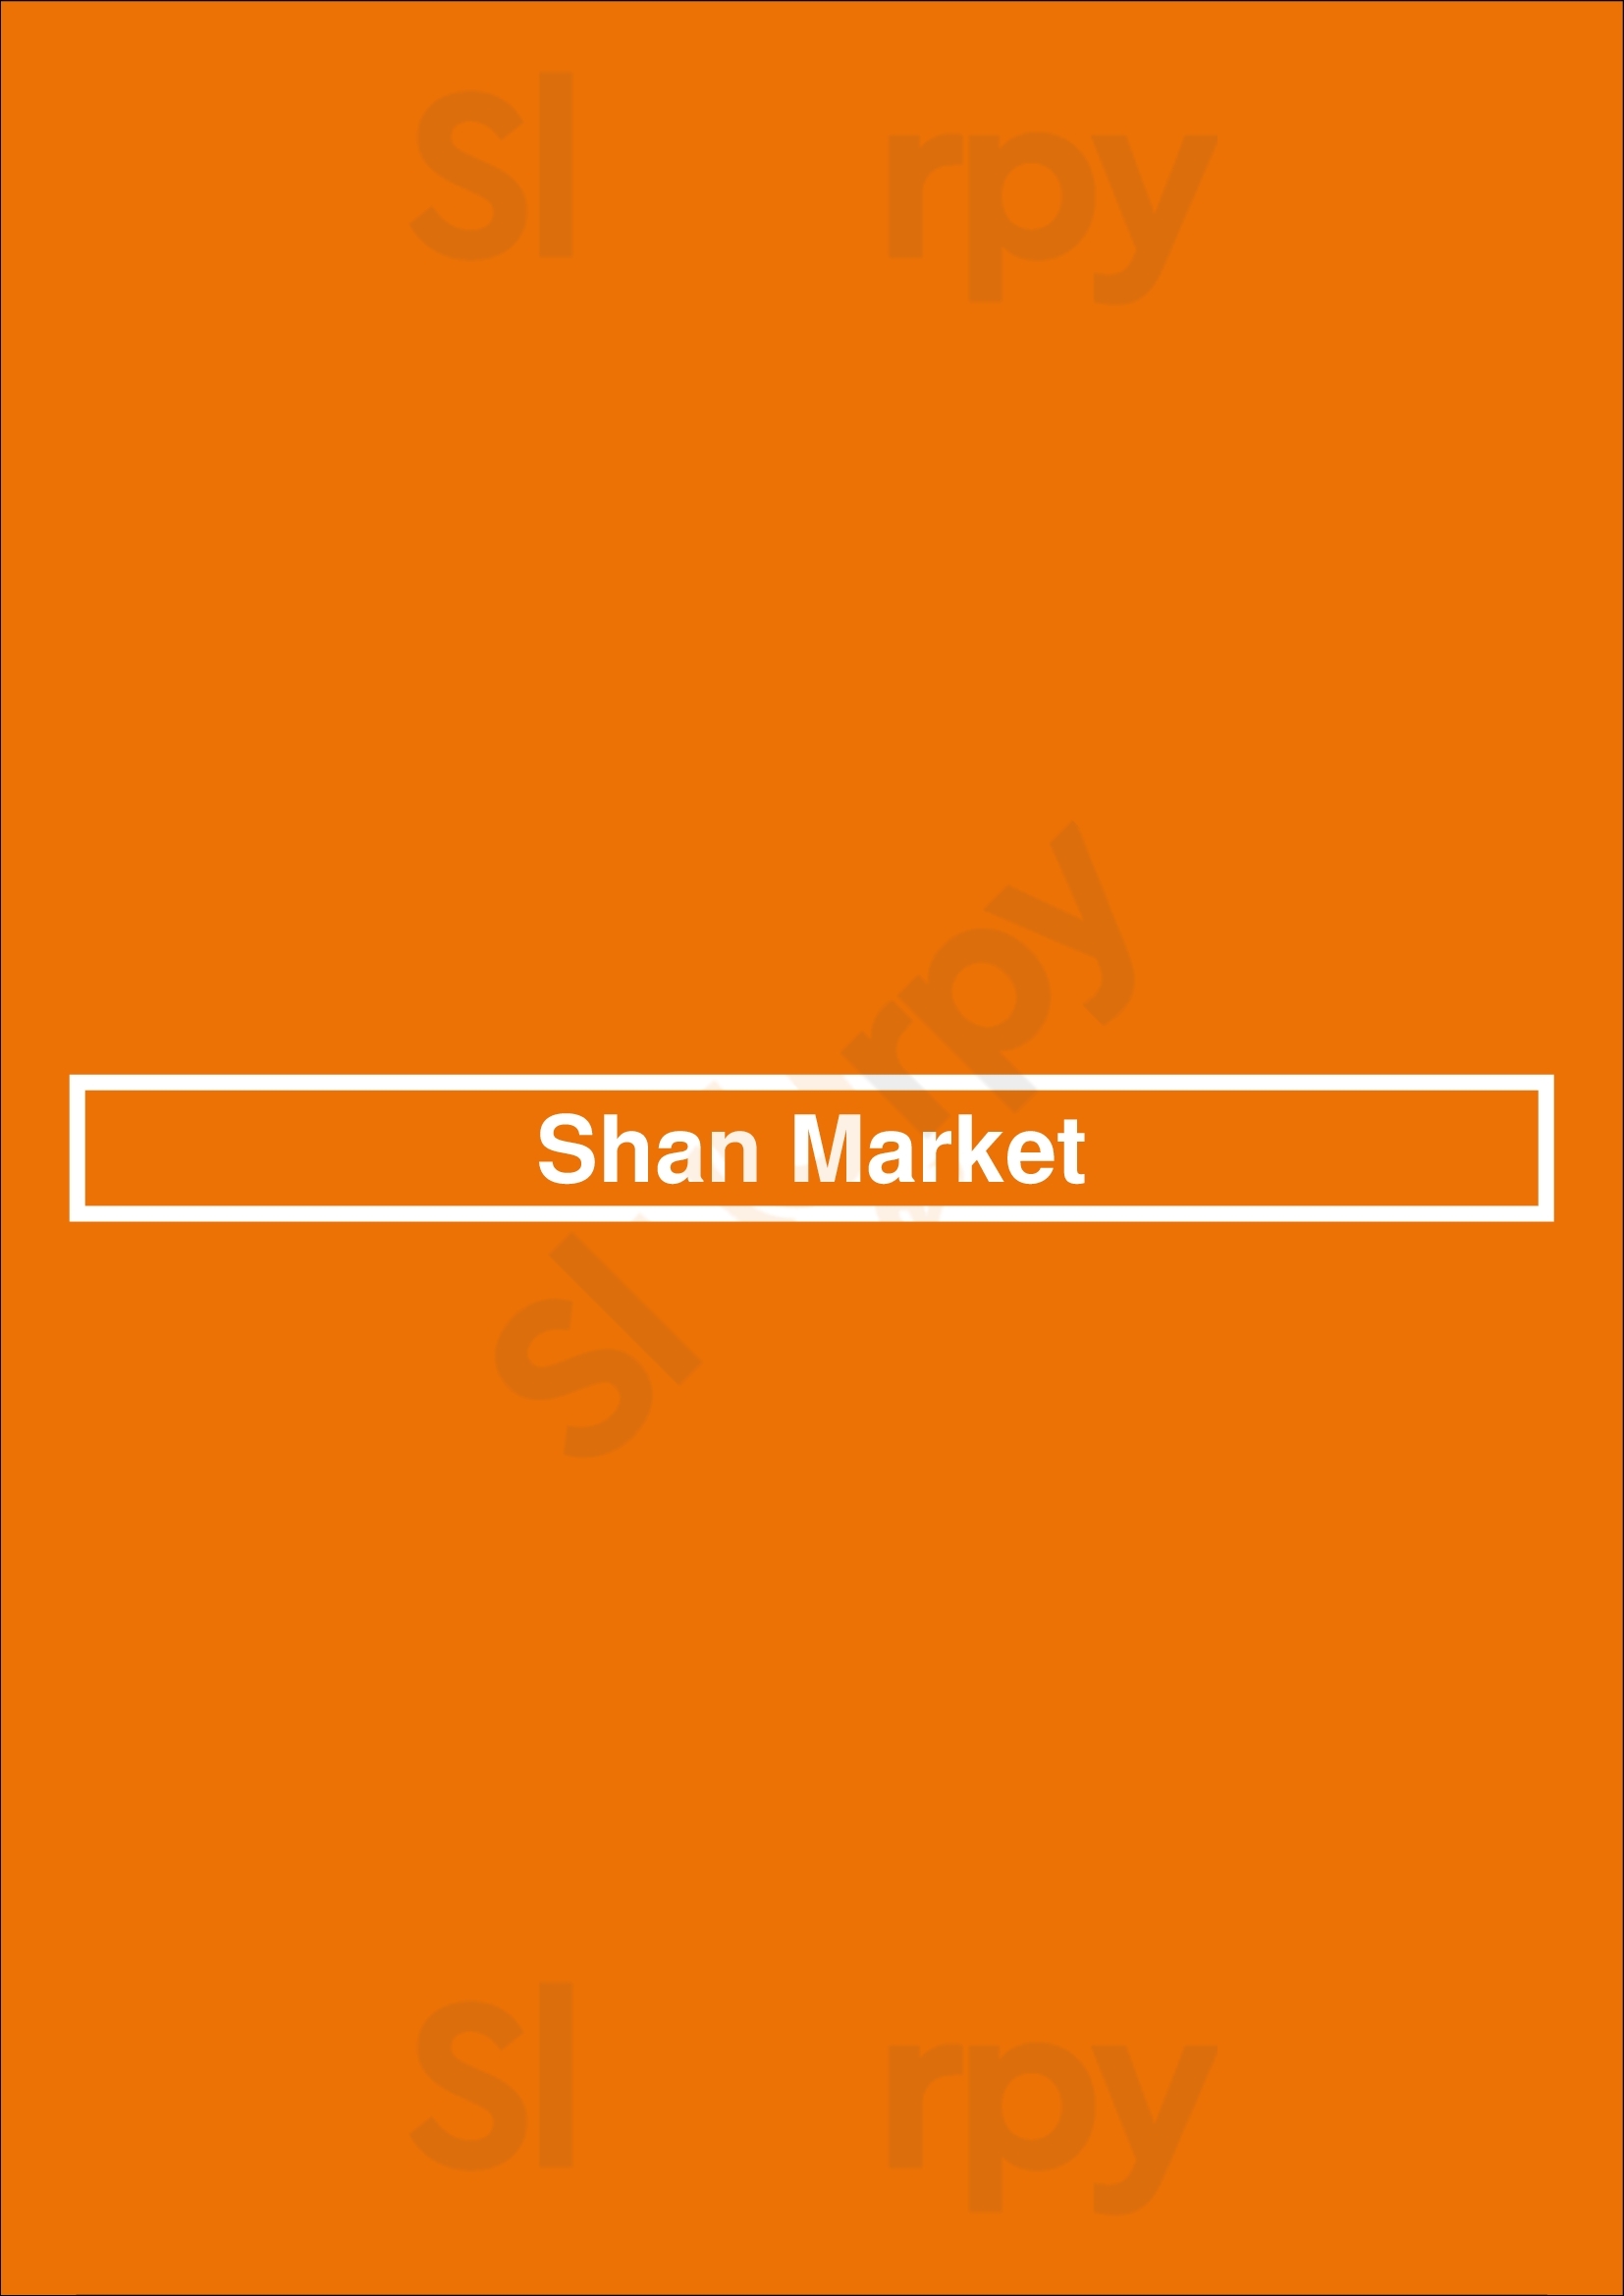 Shan Market Brooklyn Menu - 1